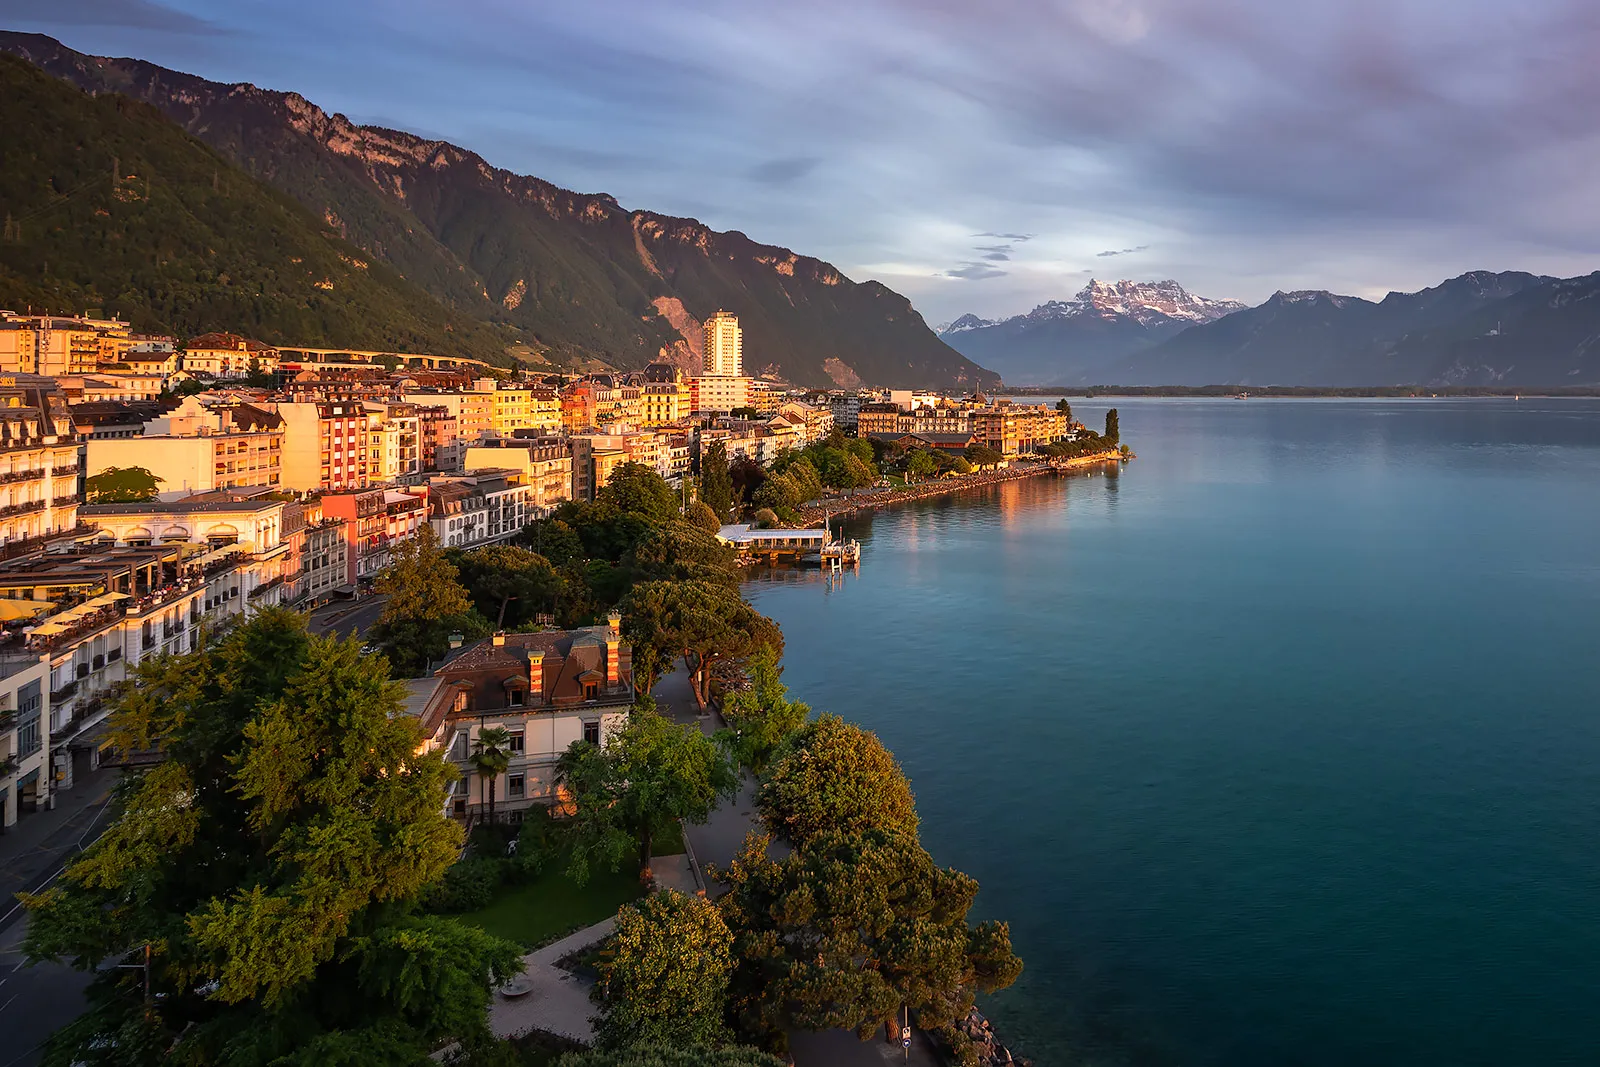 Montreaux, a Swiss resort town on the shore of Geneva Lake